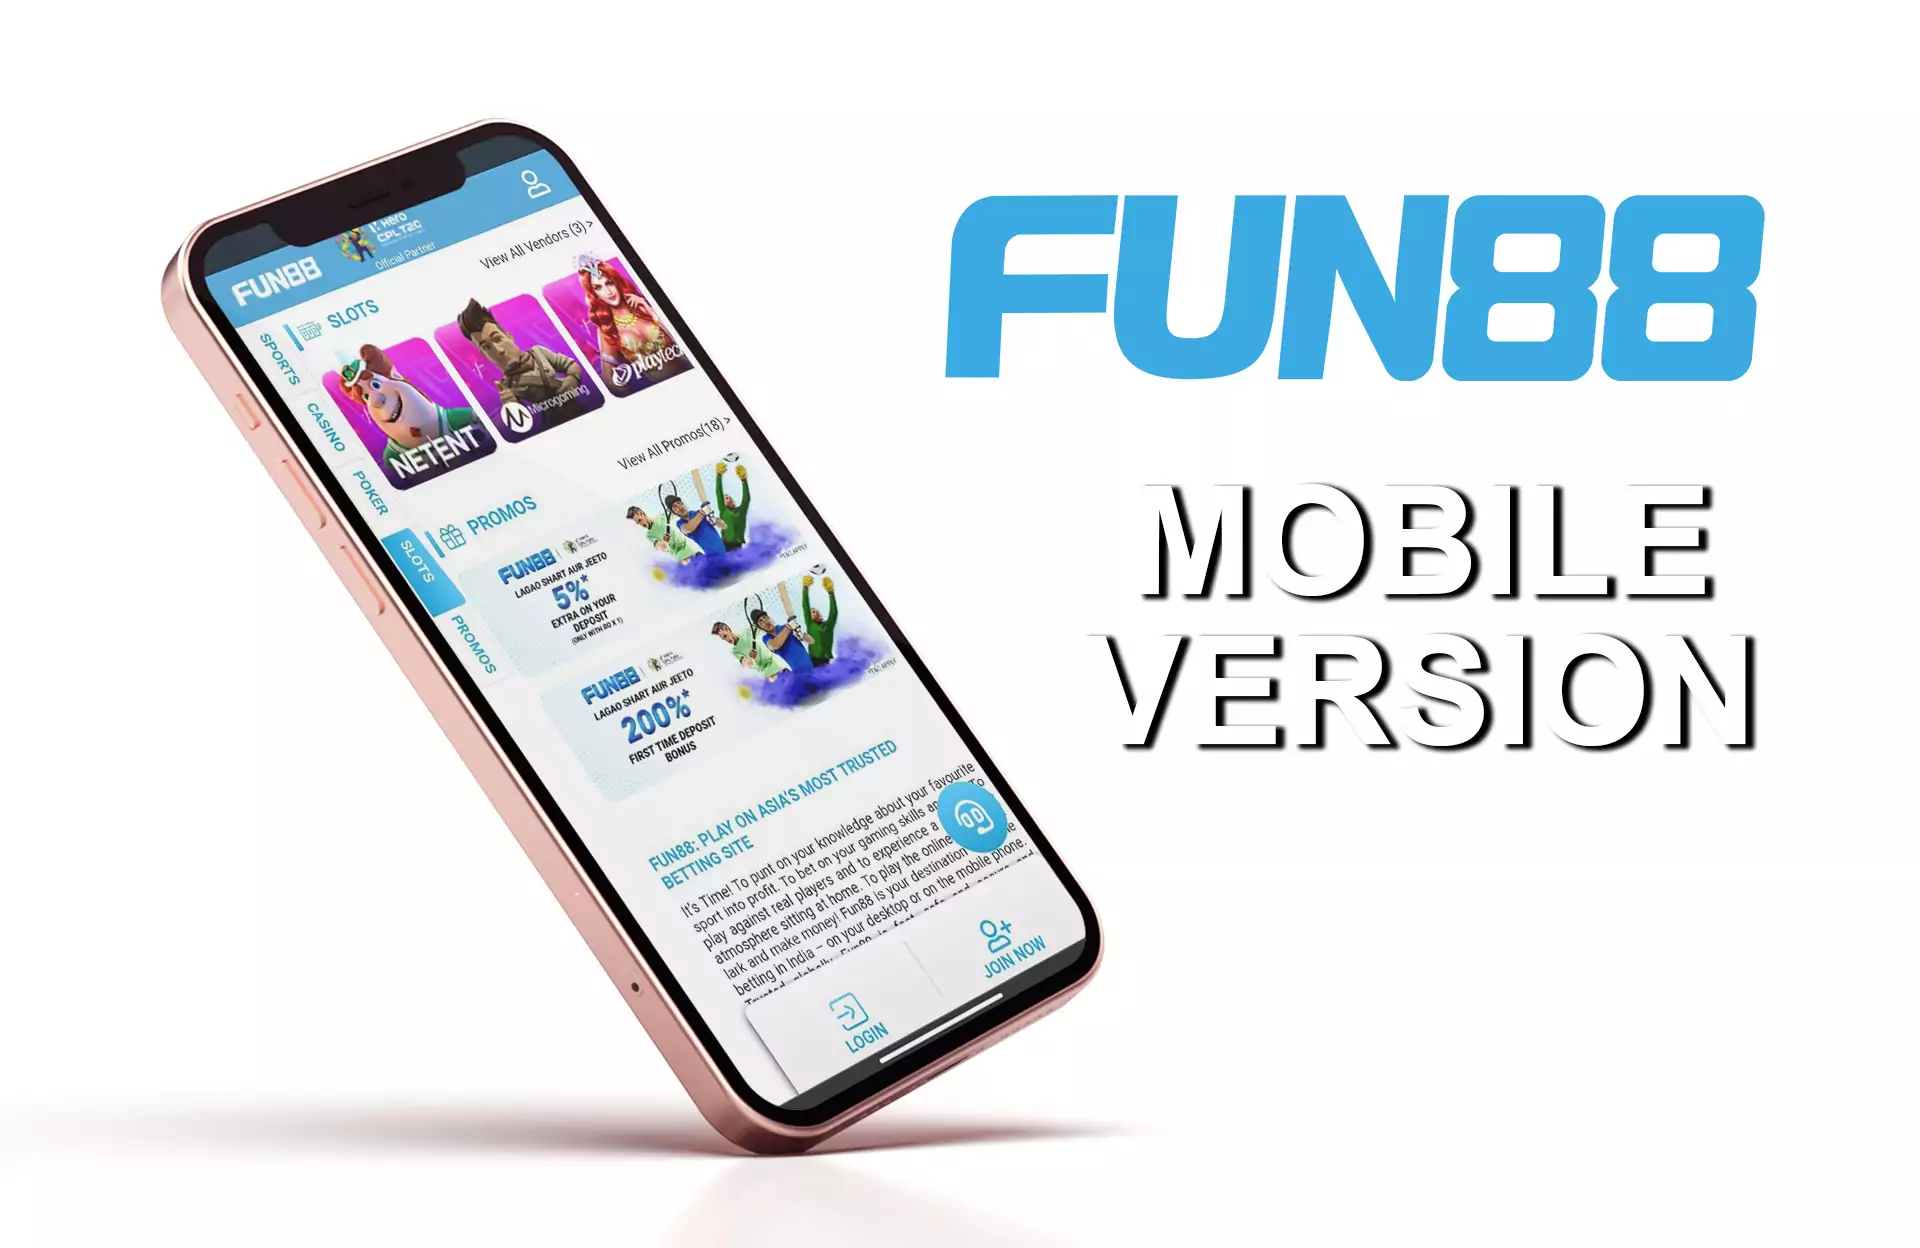 You can open Fun88 via your mobile browser.